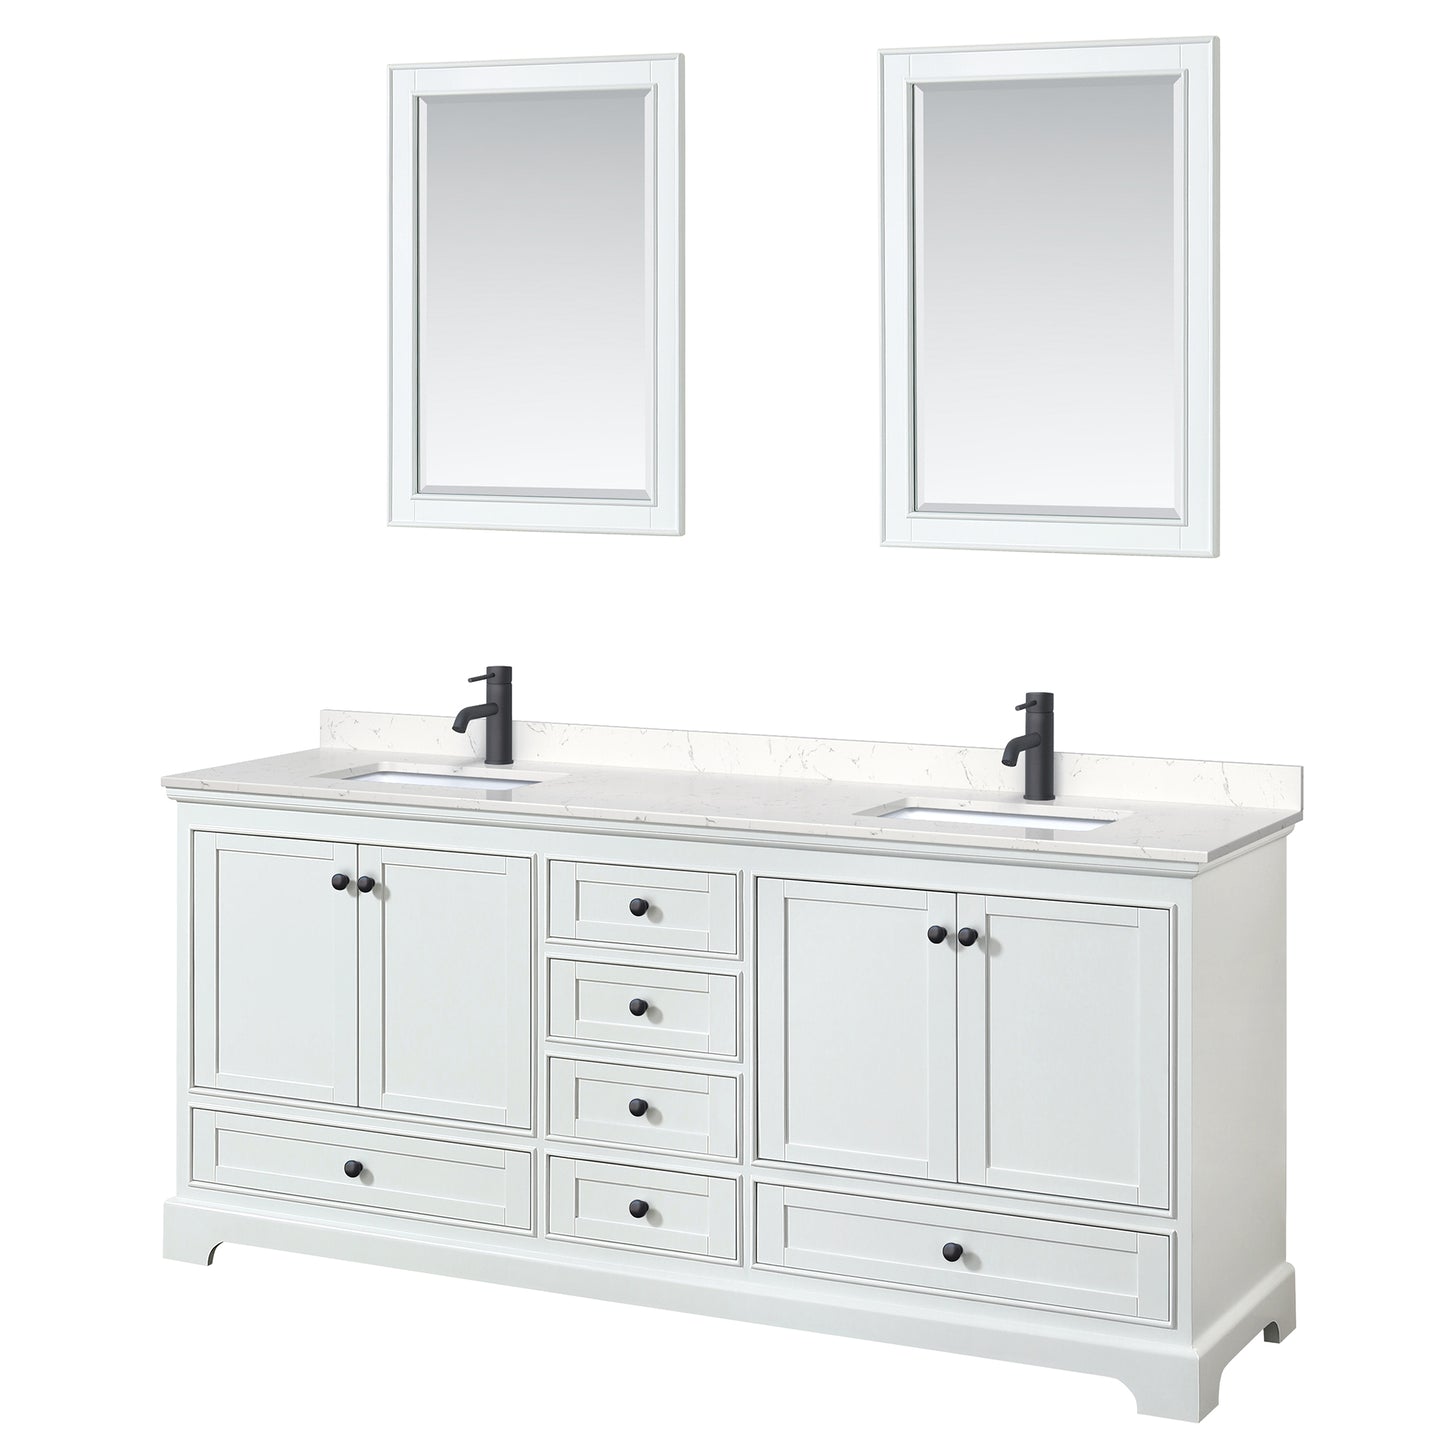 Wyndham Deborah 80 Inch Double Bathroom Vanity Carrara Cultured Marble Countertop, Undermount Square Sinks in Matte Black Trim with 24 Inch Mirrors - Luxe Bathroom Vanities